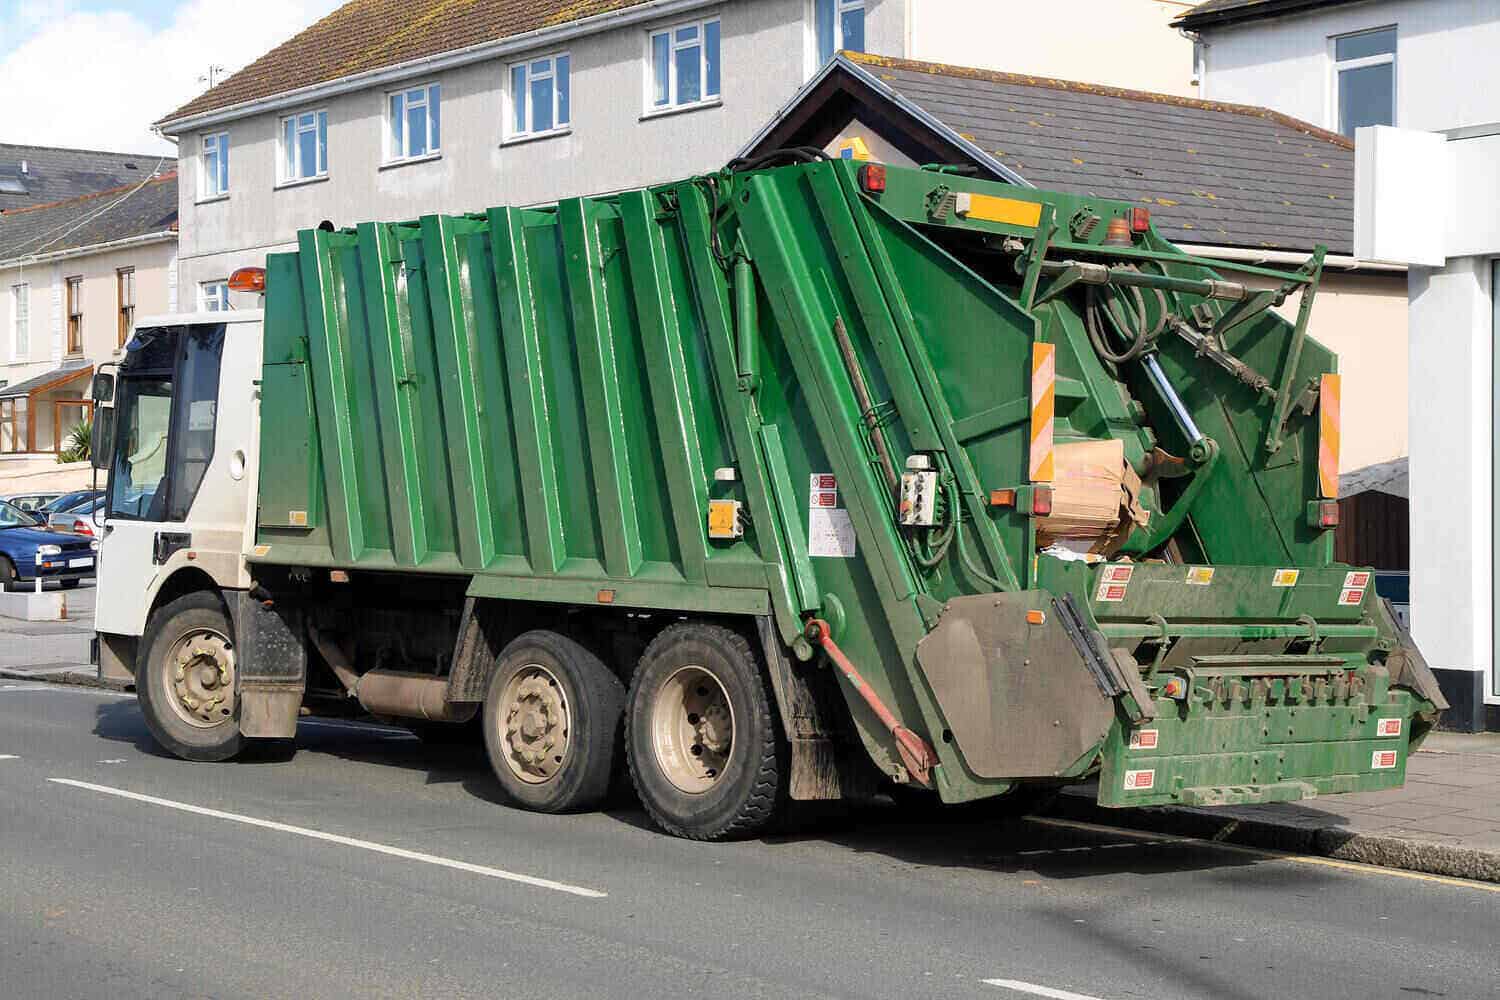 Green rubbish truck on road